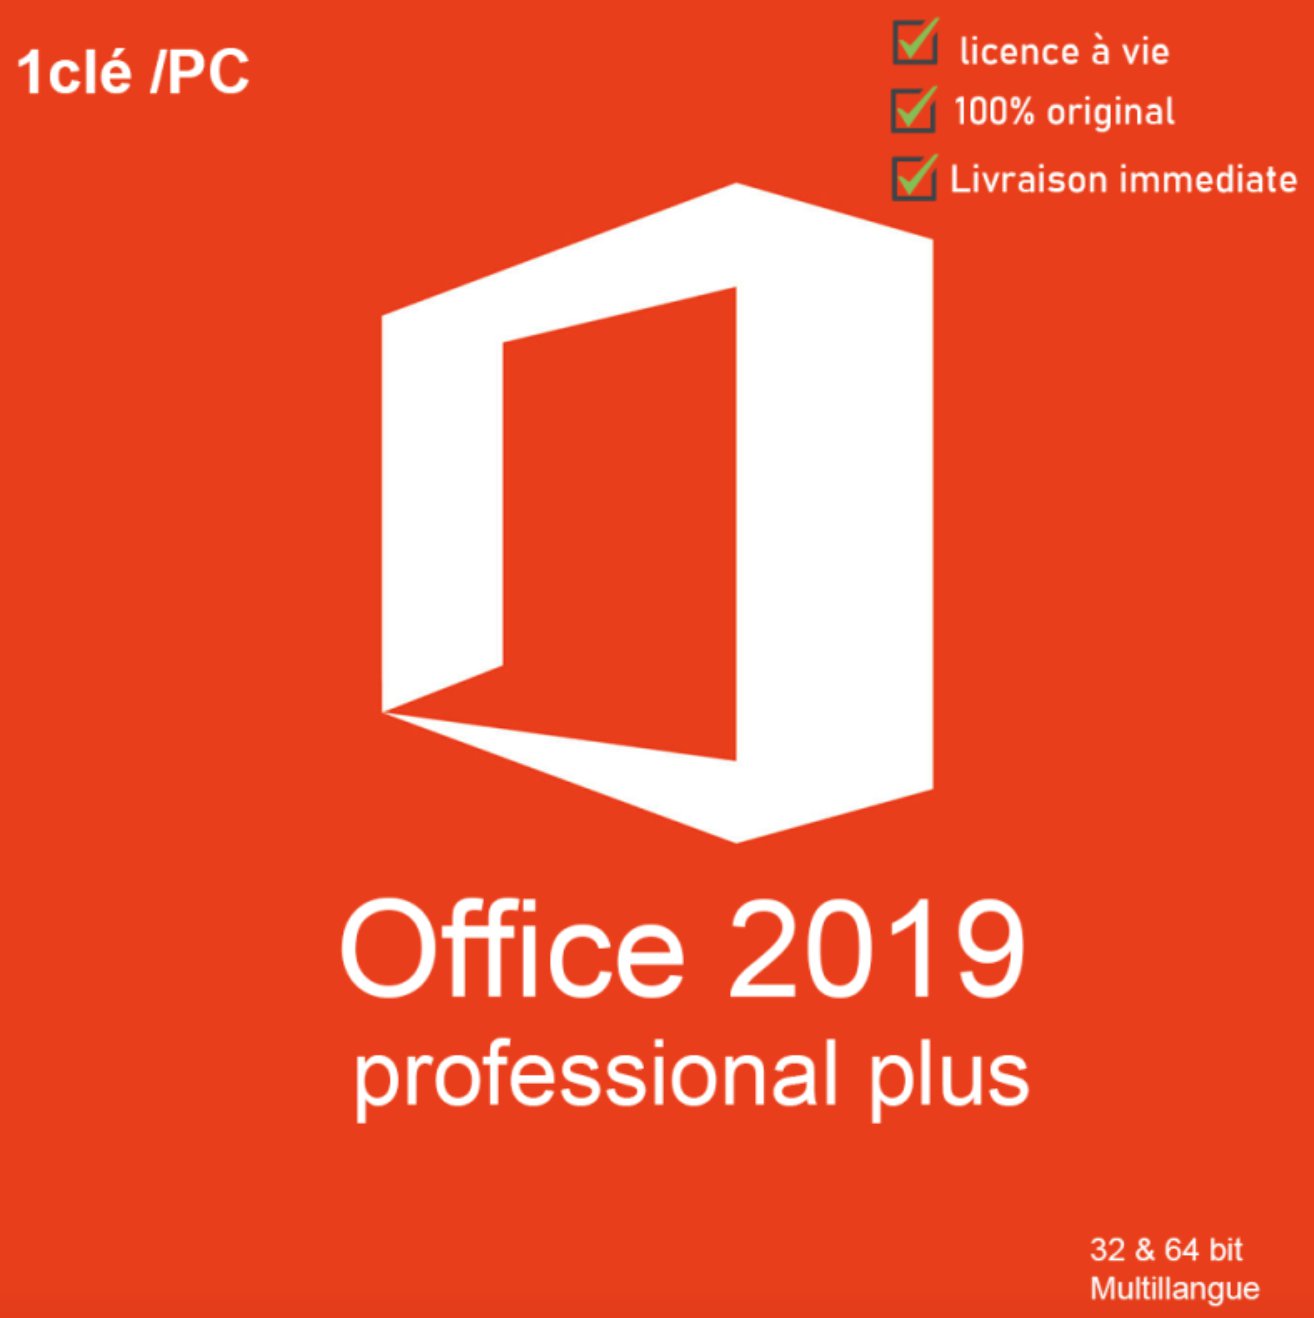 office 2019 professional plus 32 bit download